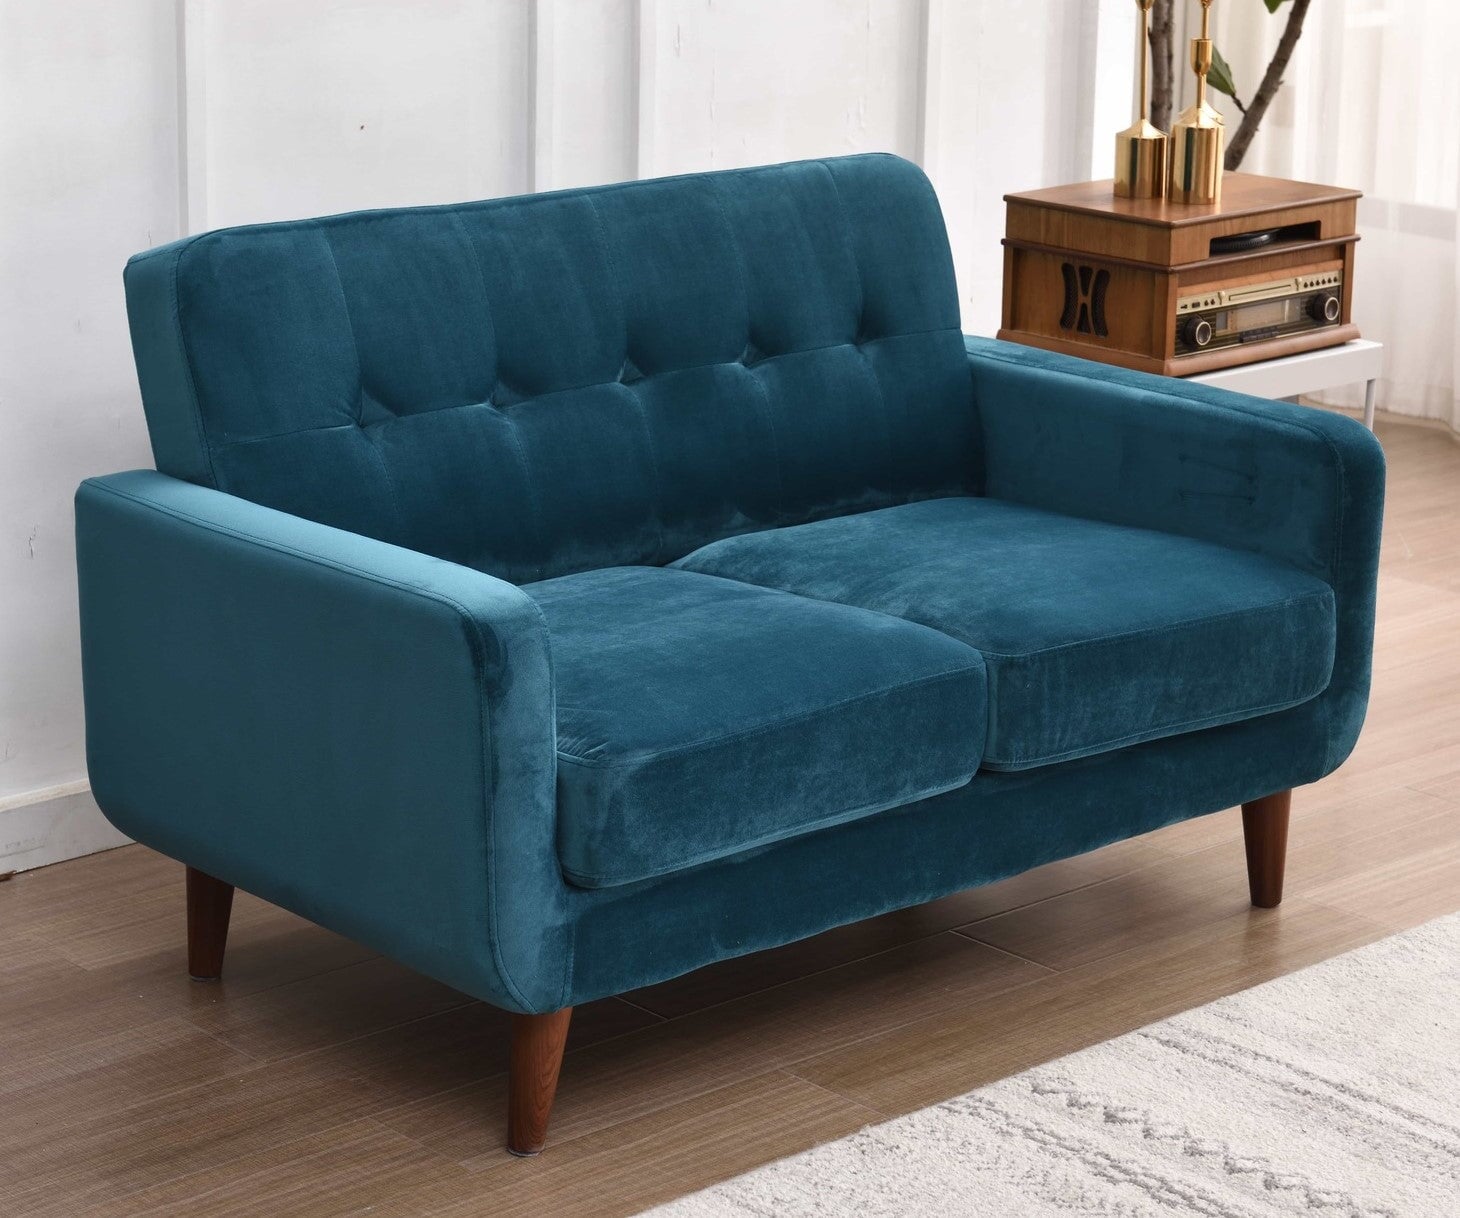 Dexter 2 Seater Sofa | Teal Blue Plush Velvet Sofas Casa Maria Designs 